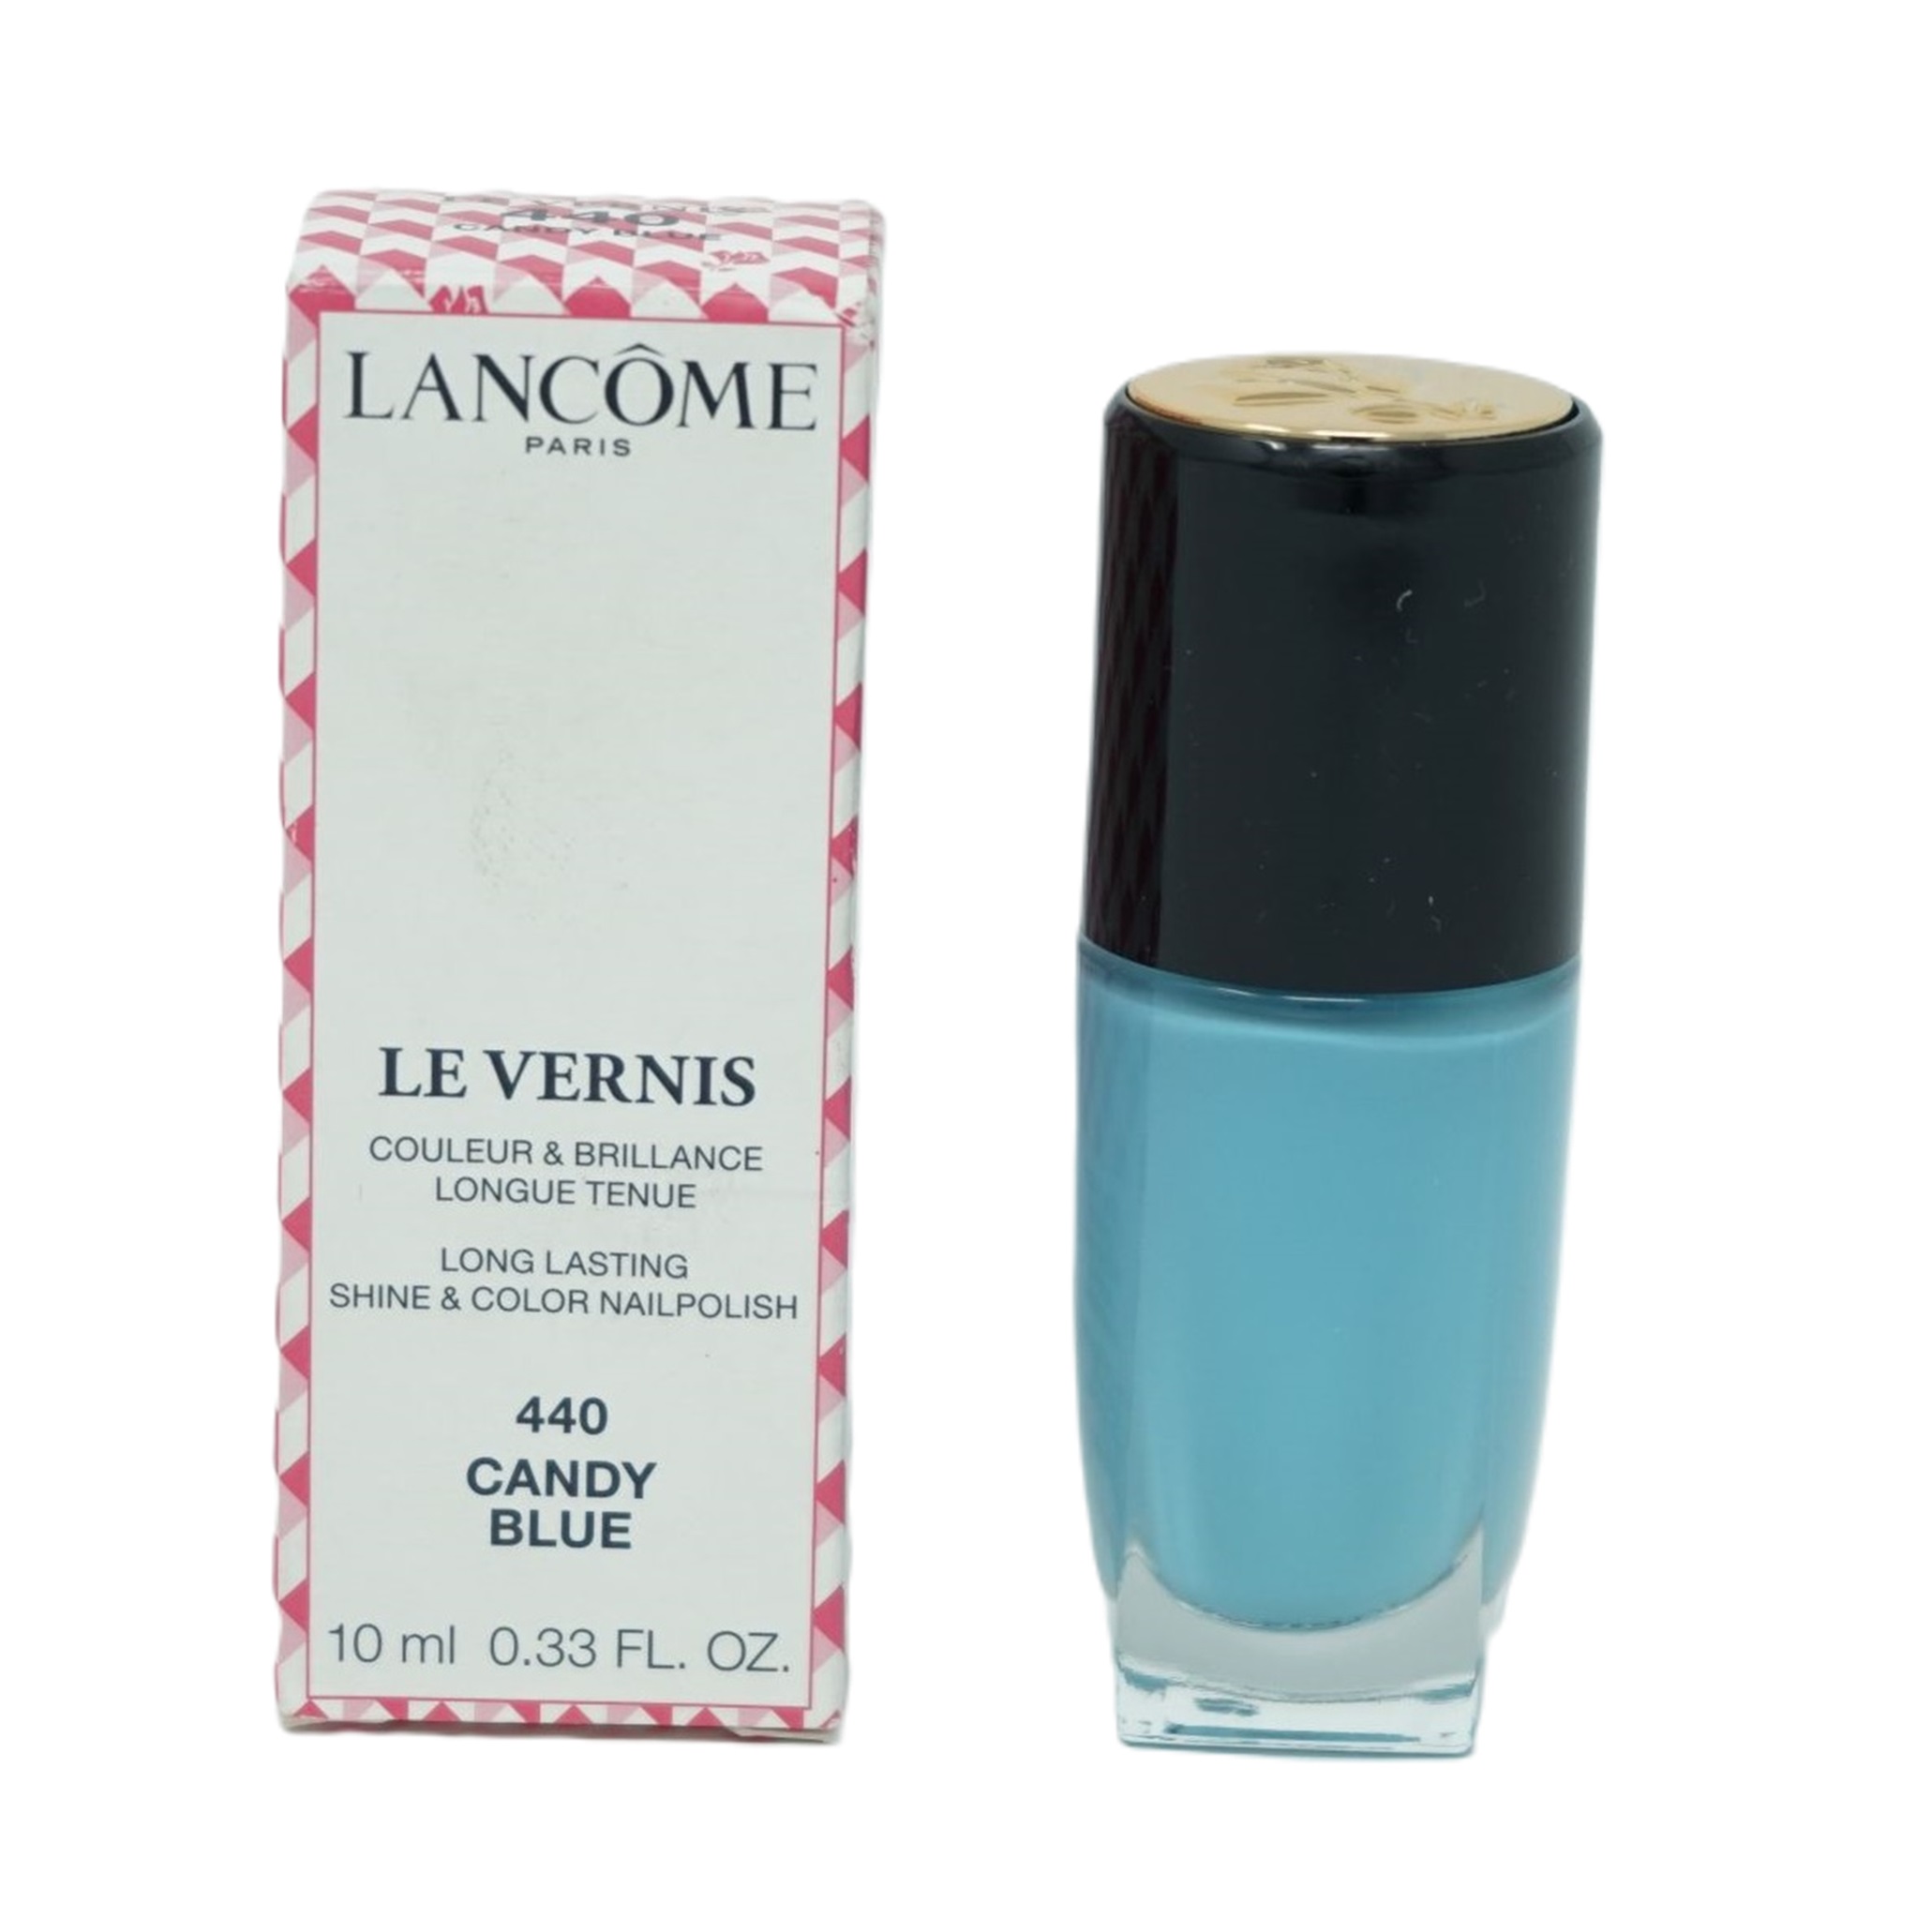 Lancome Le Vernis Nagellack long lasting 10ml 440 Candy Blue